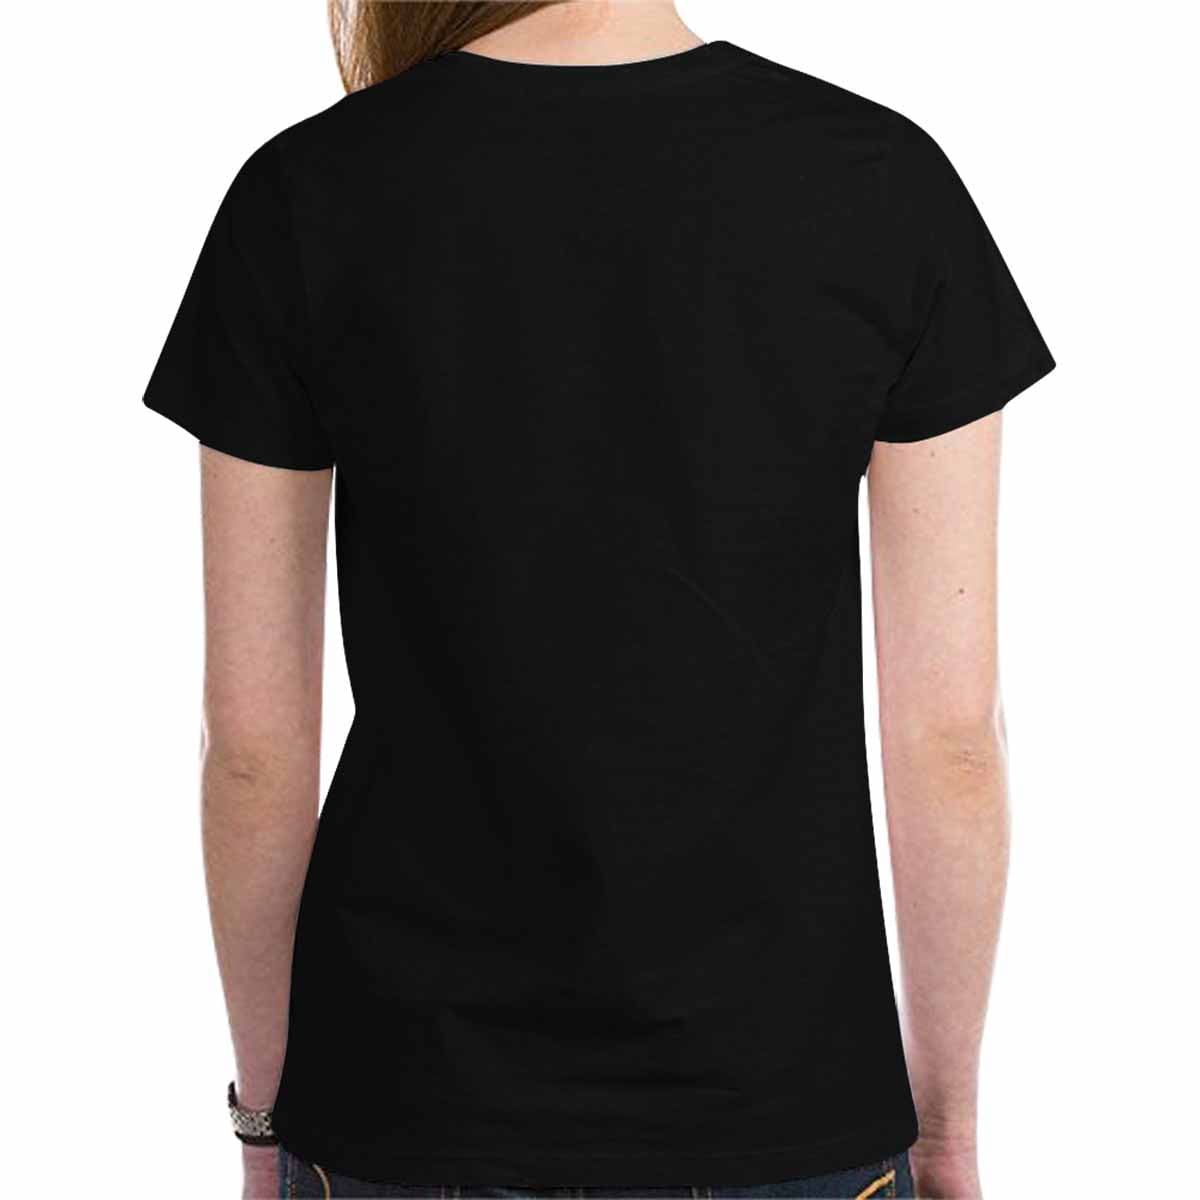 Womens T-shirt James 5:16 - Black Graphic Tee - Womens | T-Shirts